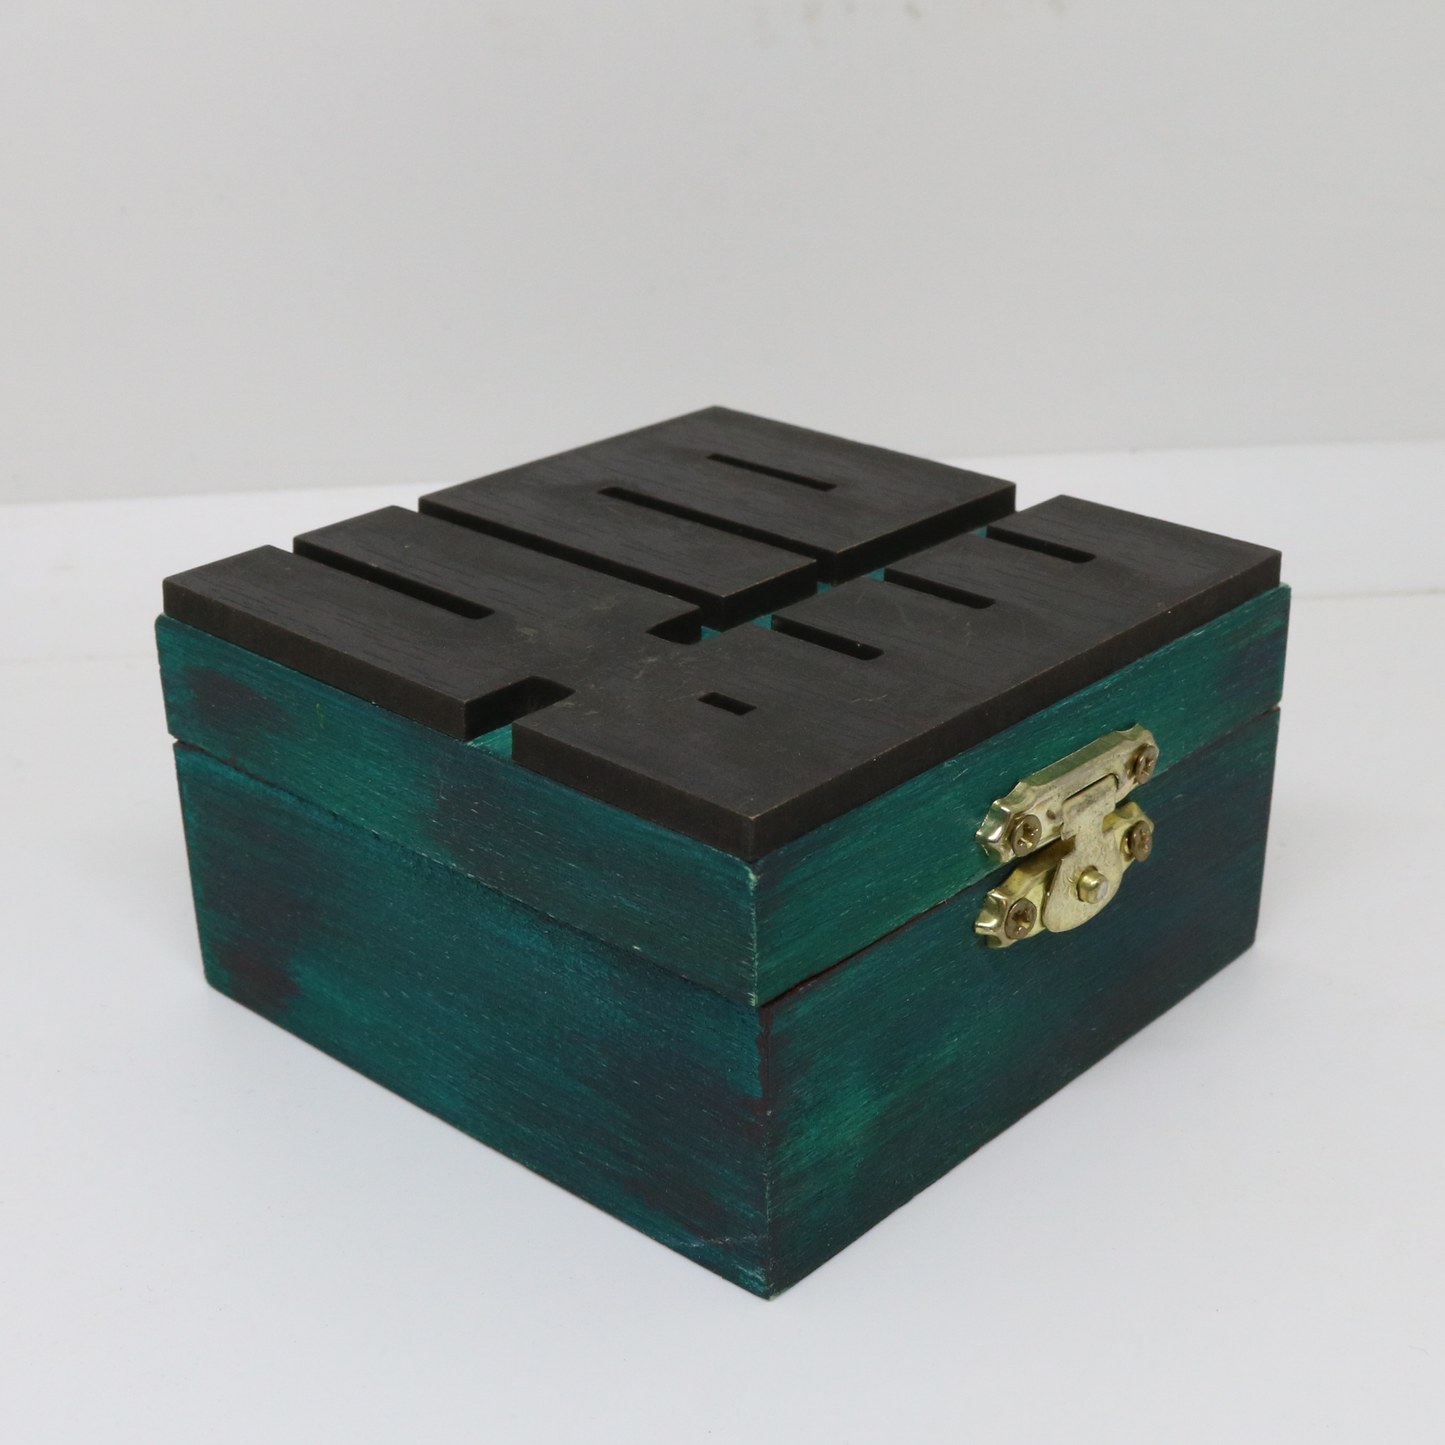 سلام Salam Small Wooden Gift Box - Blue